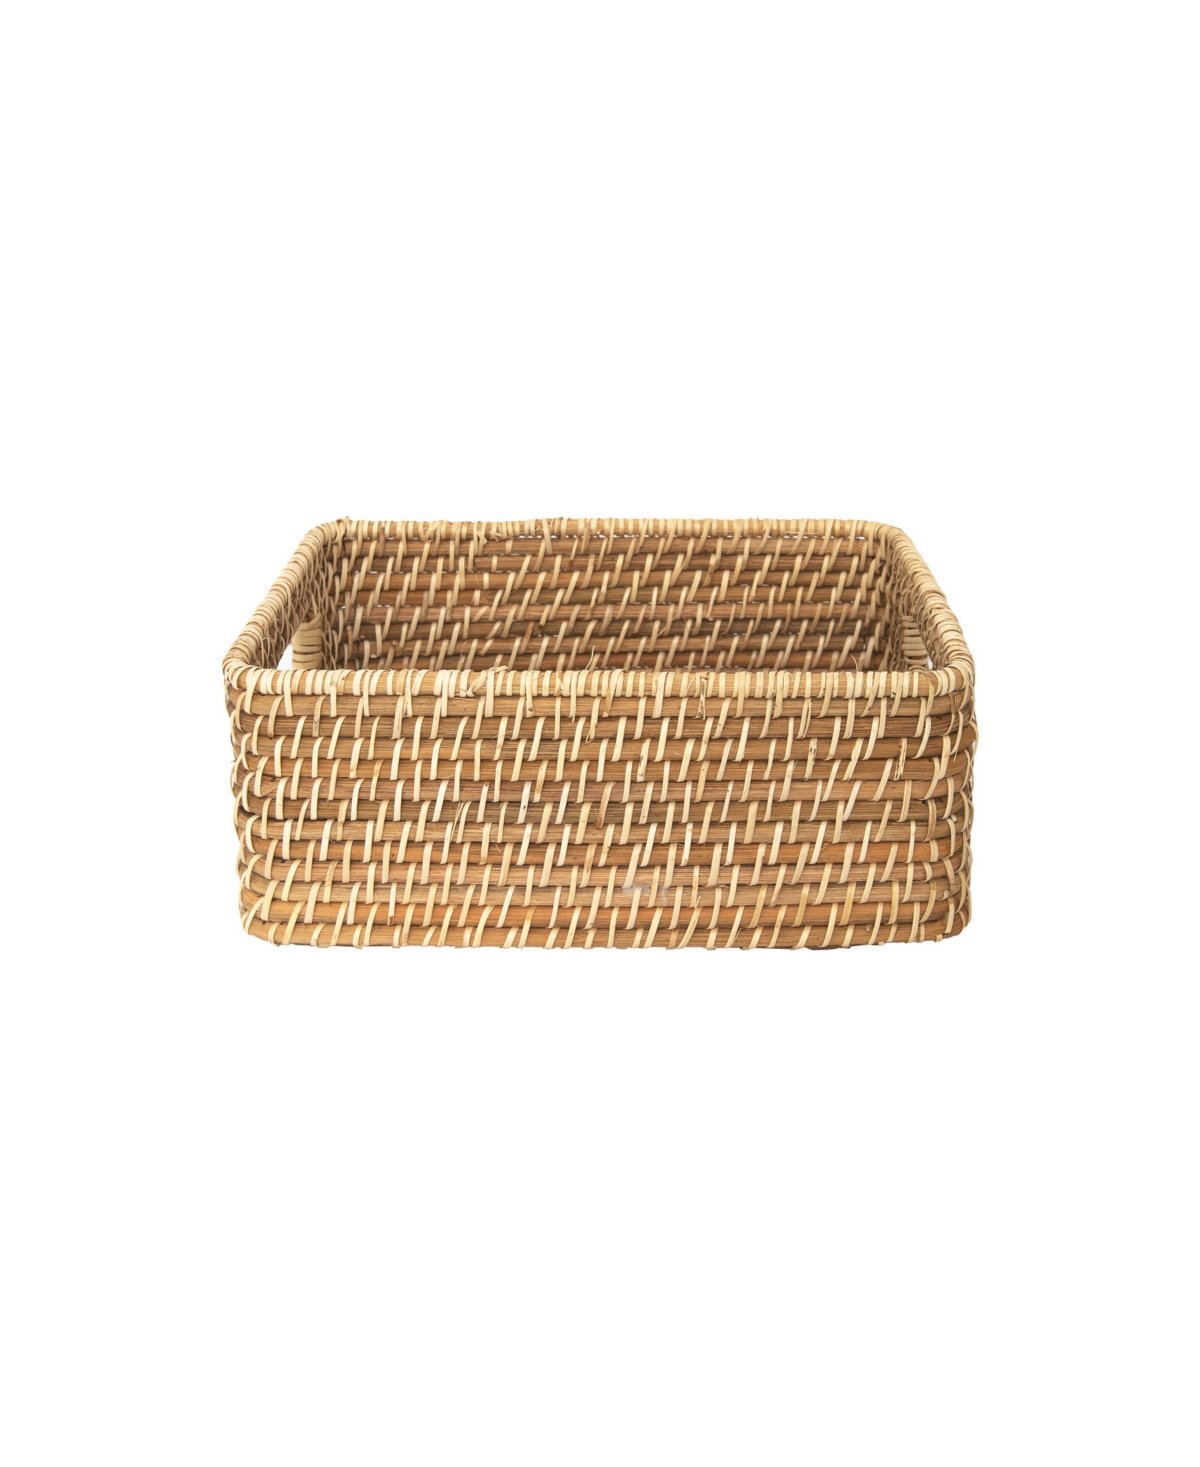 Wethinkstorage 11-liter Capacity Hand-woven Rattan Storage Basket In Natural